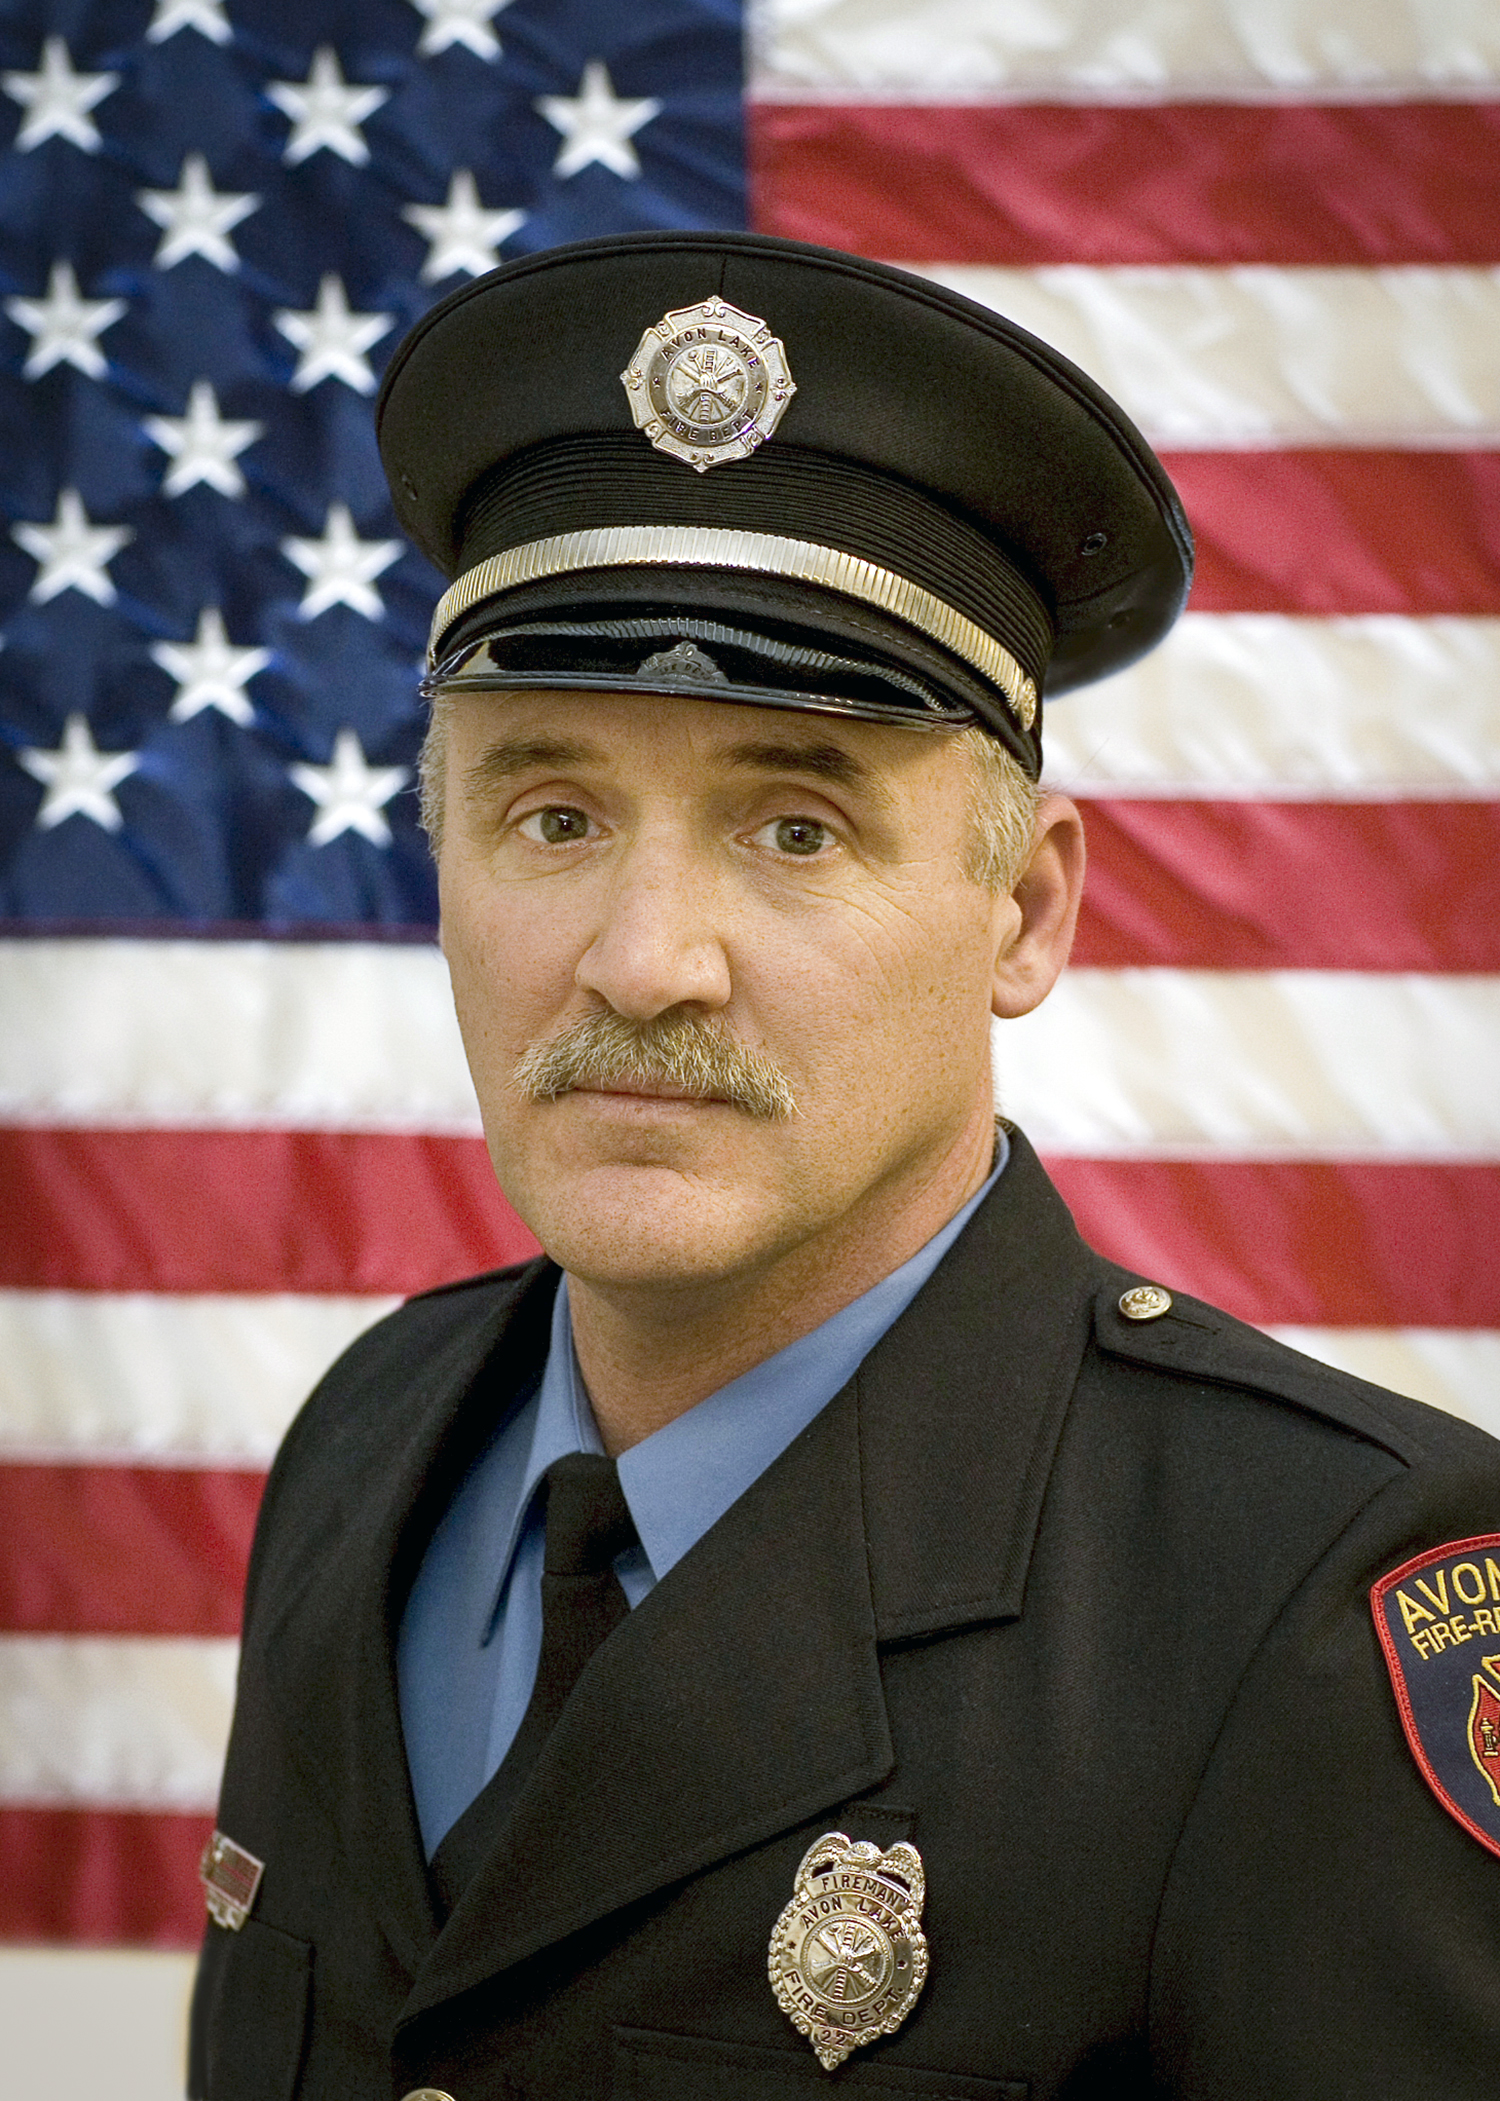 Firefighter/Paramedic Frank Ogle